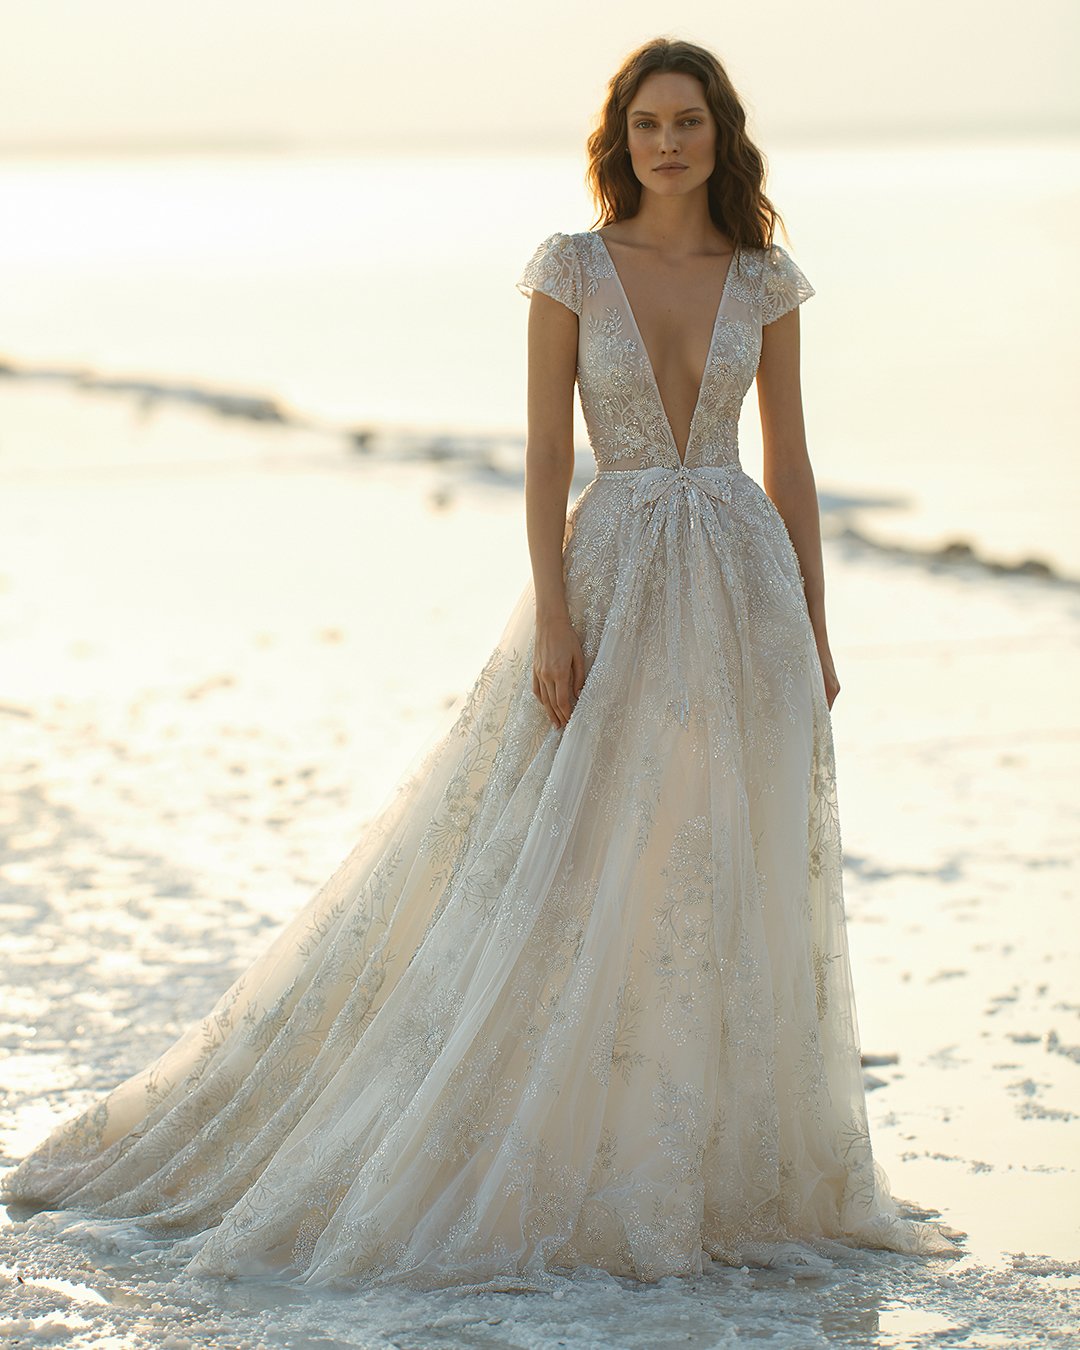 Vintage Deep V Neck Wedding Dresses Long Sleeve Lace Appliques Bridal Gowns   eBay